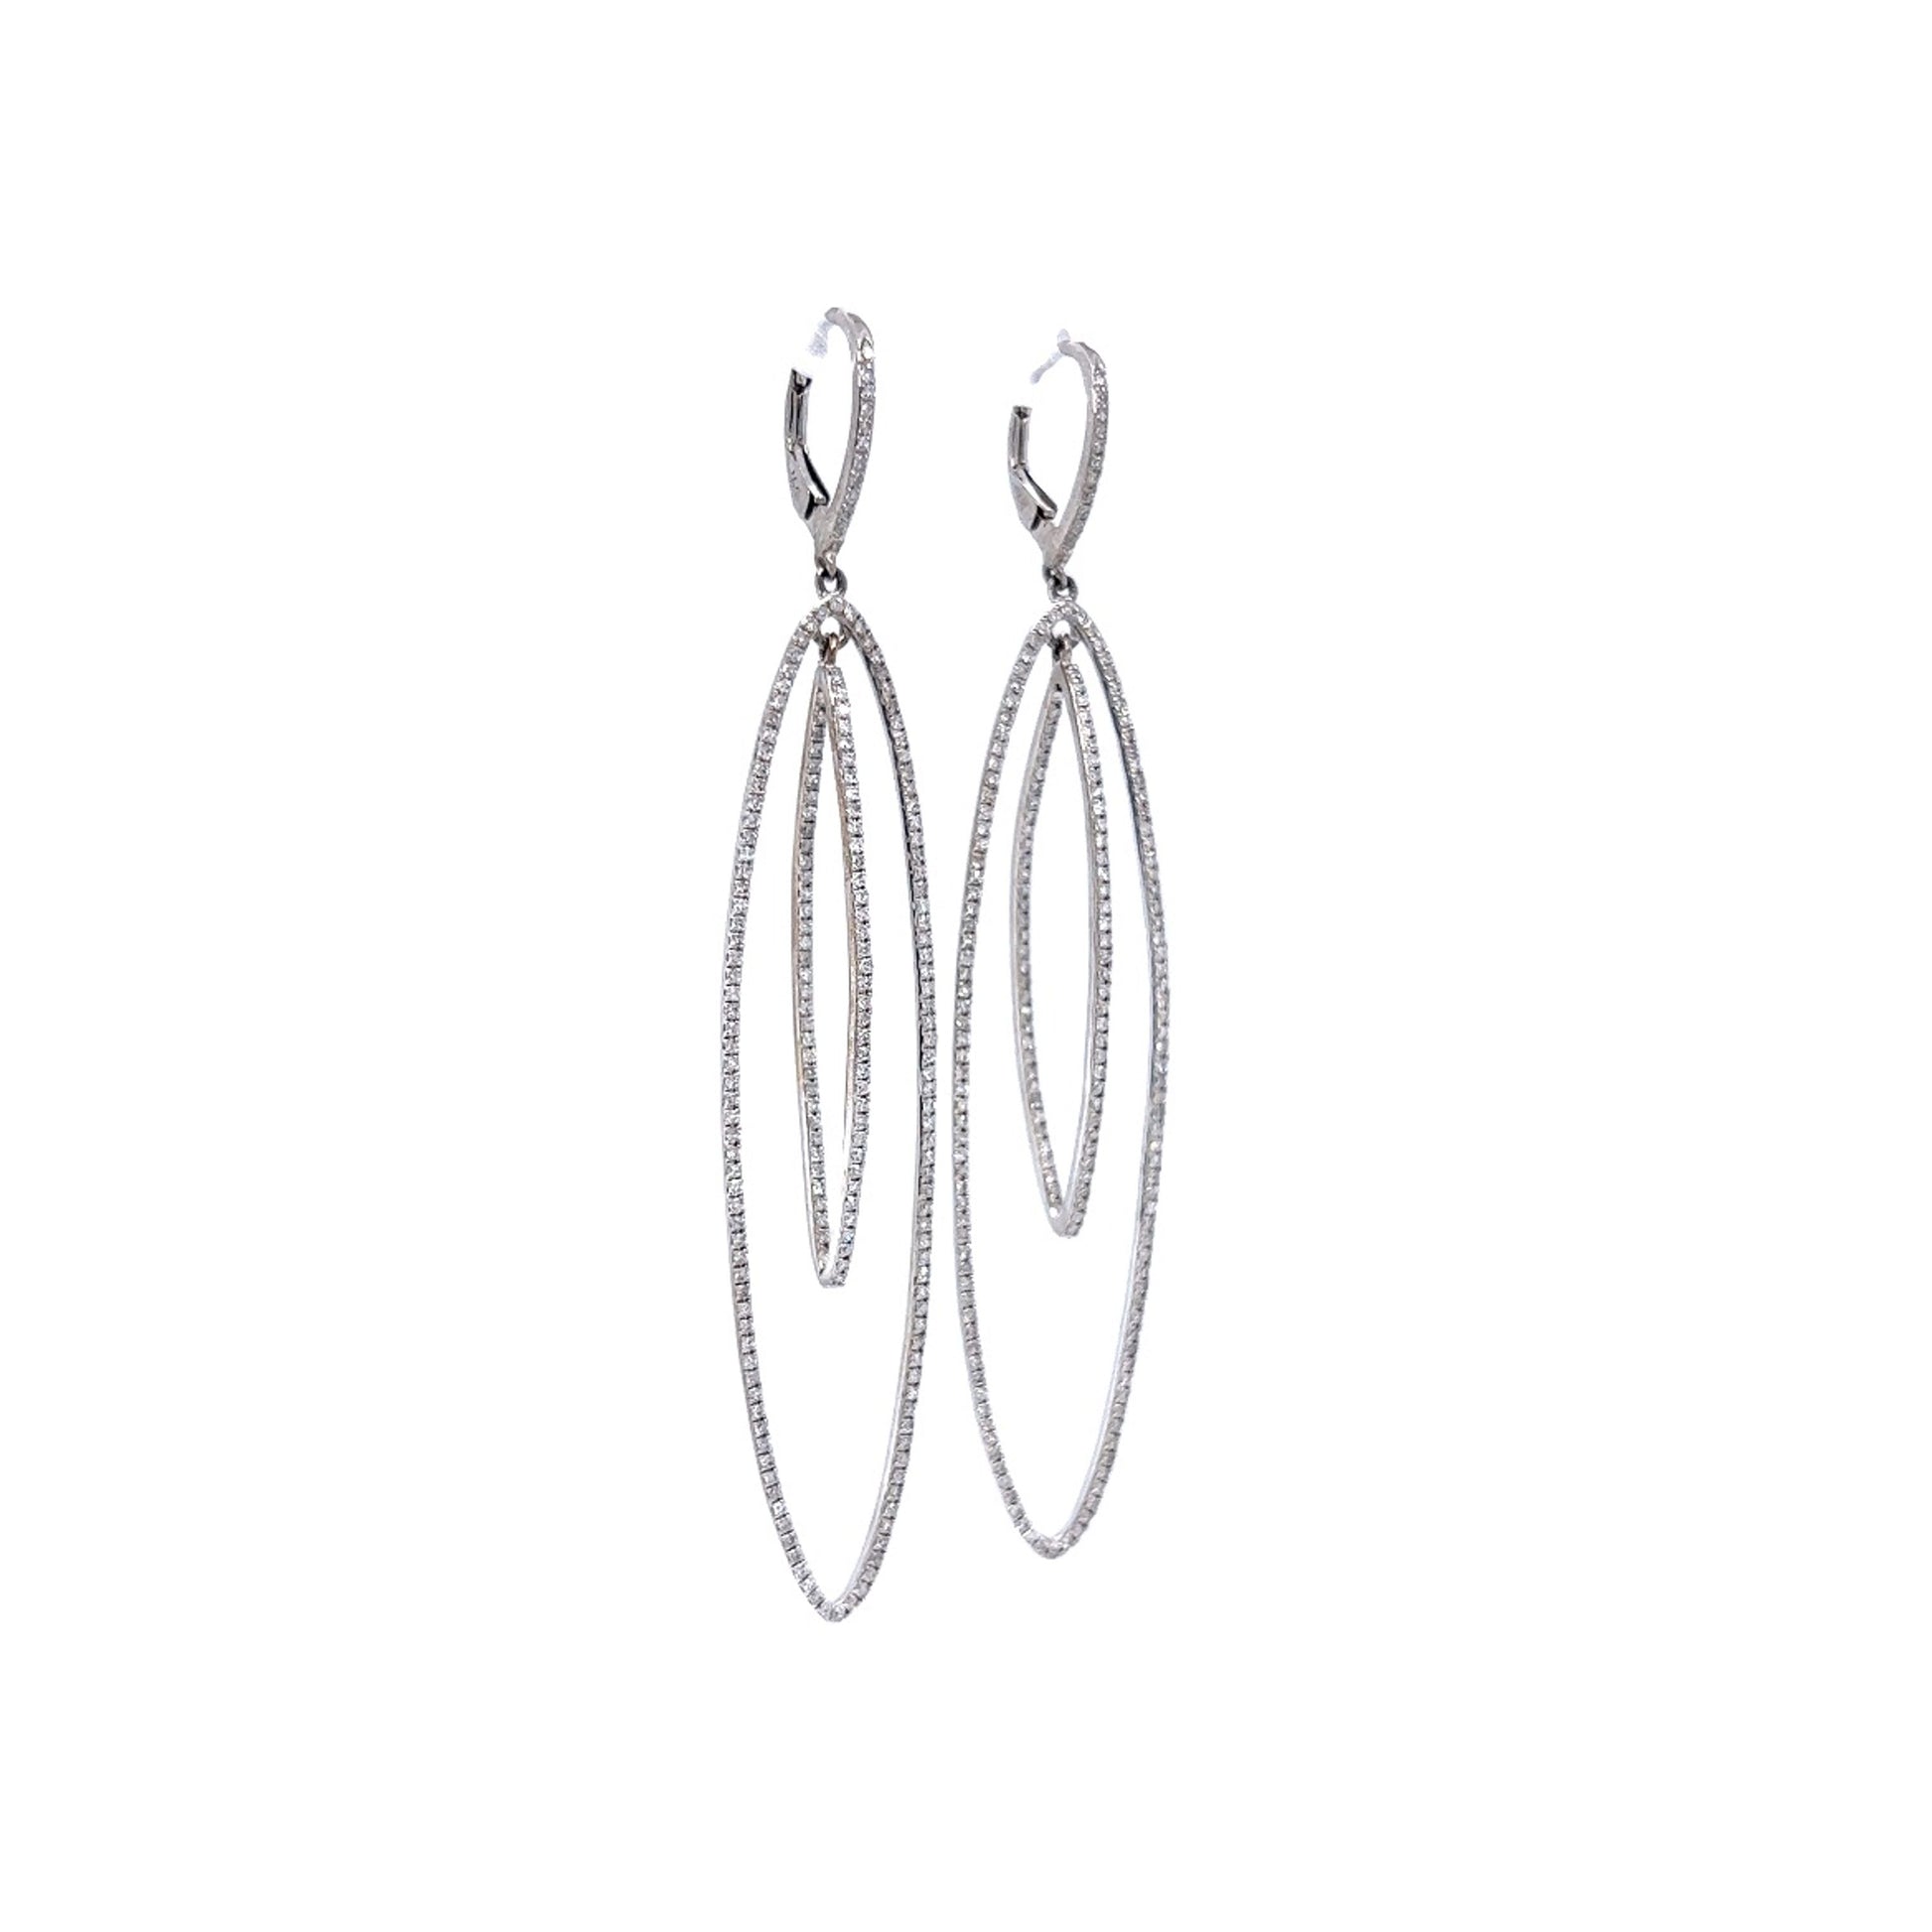 Oval Pave Diamond Hoop Earrings in 18k White GoldComposition: 18 Karat White GoldTotal Diamond Weight: 1.24 ctTotal Gram Weight: 6.8 gInscription: 14k